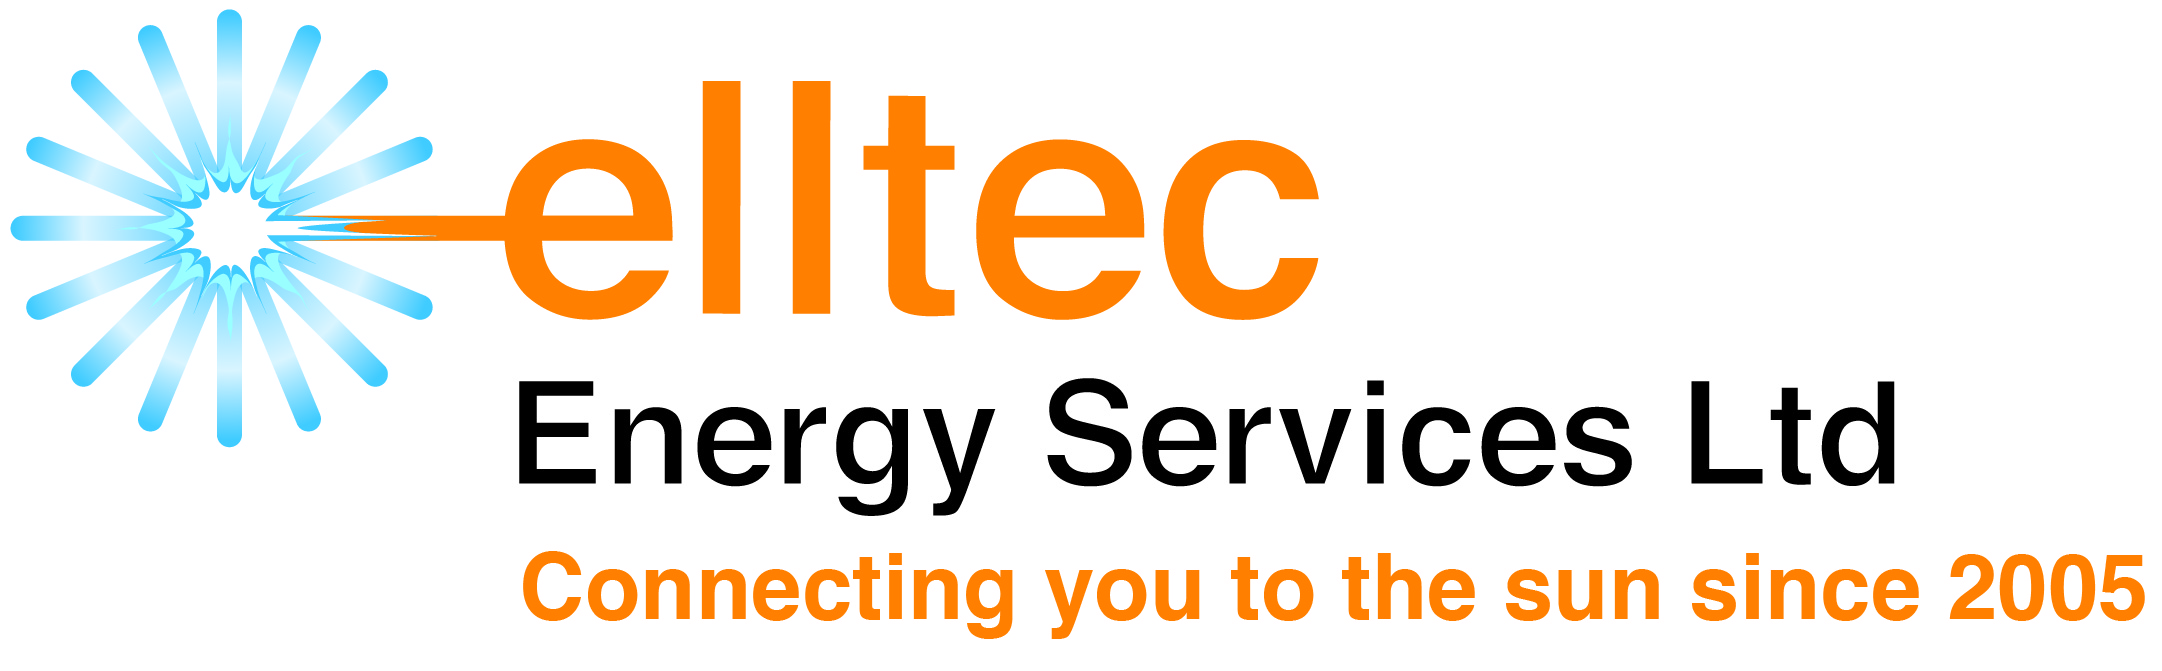 Organisation Logo - Elltec Energy Services Ltd